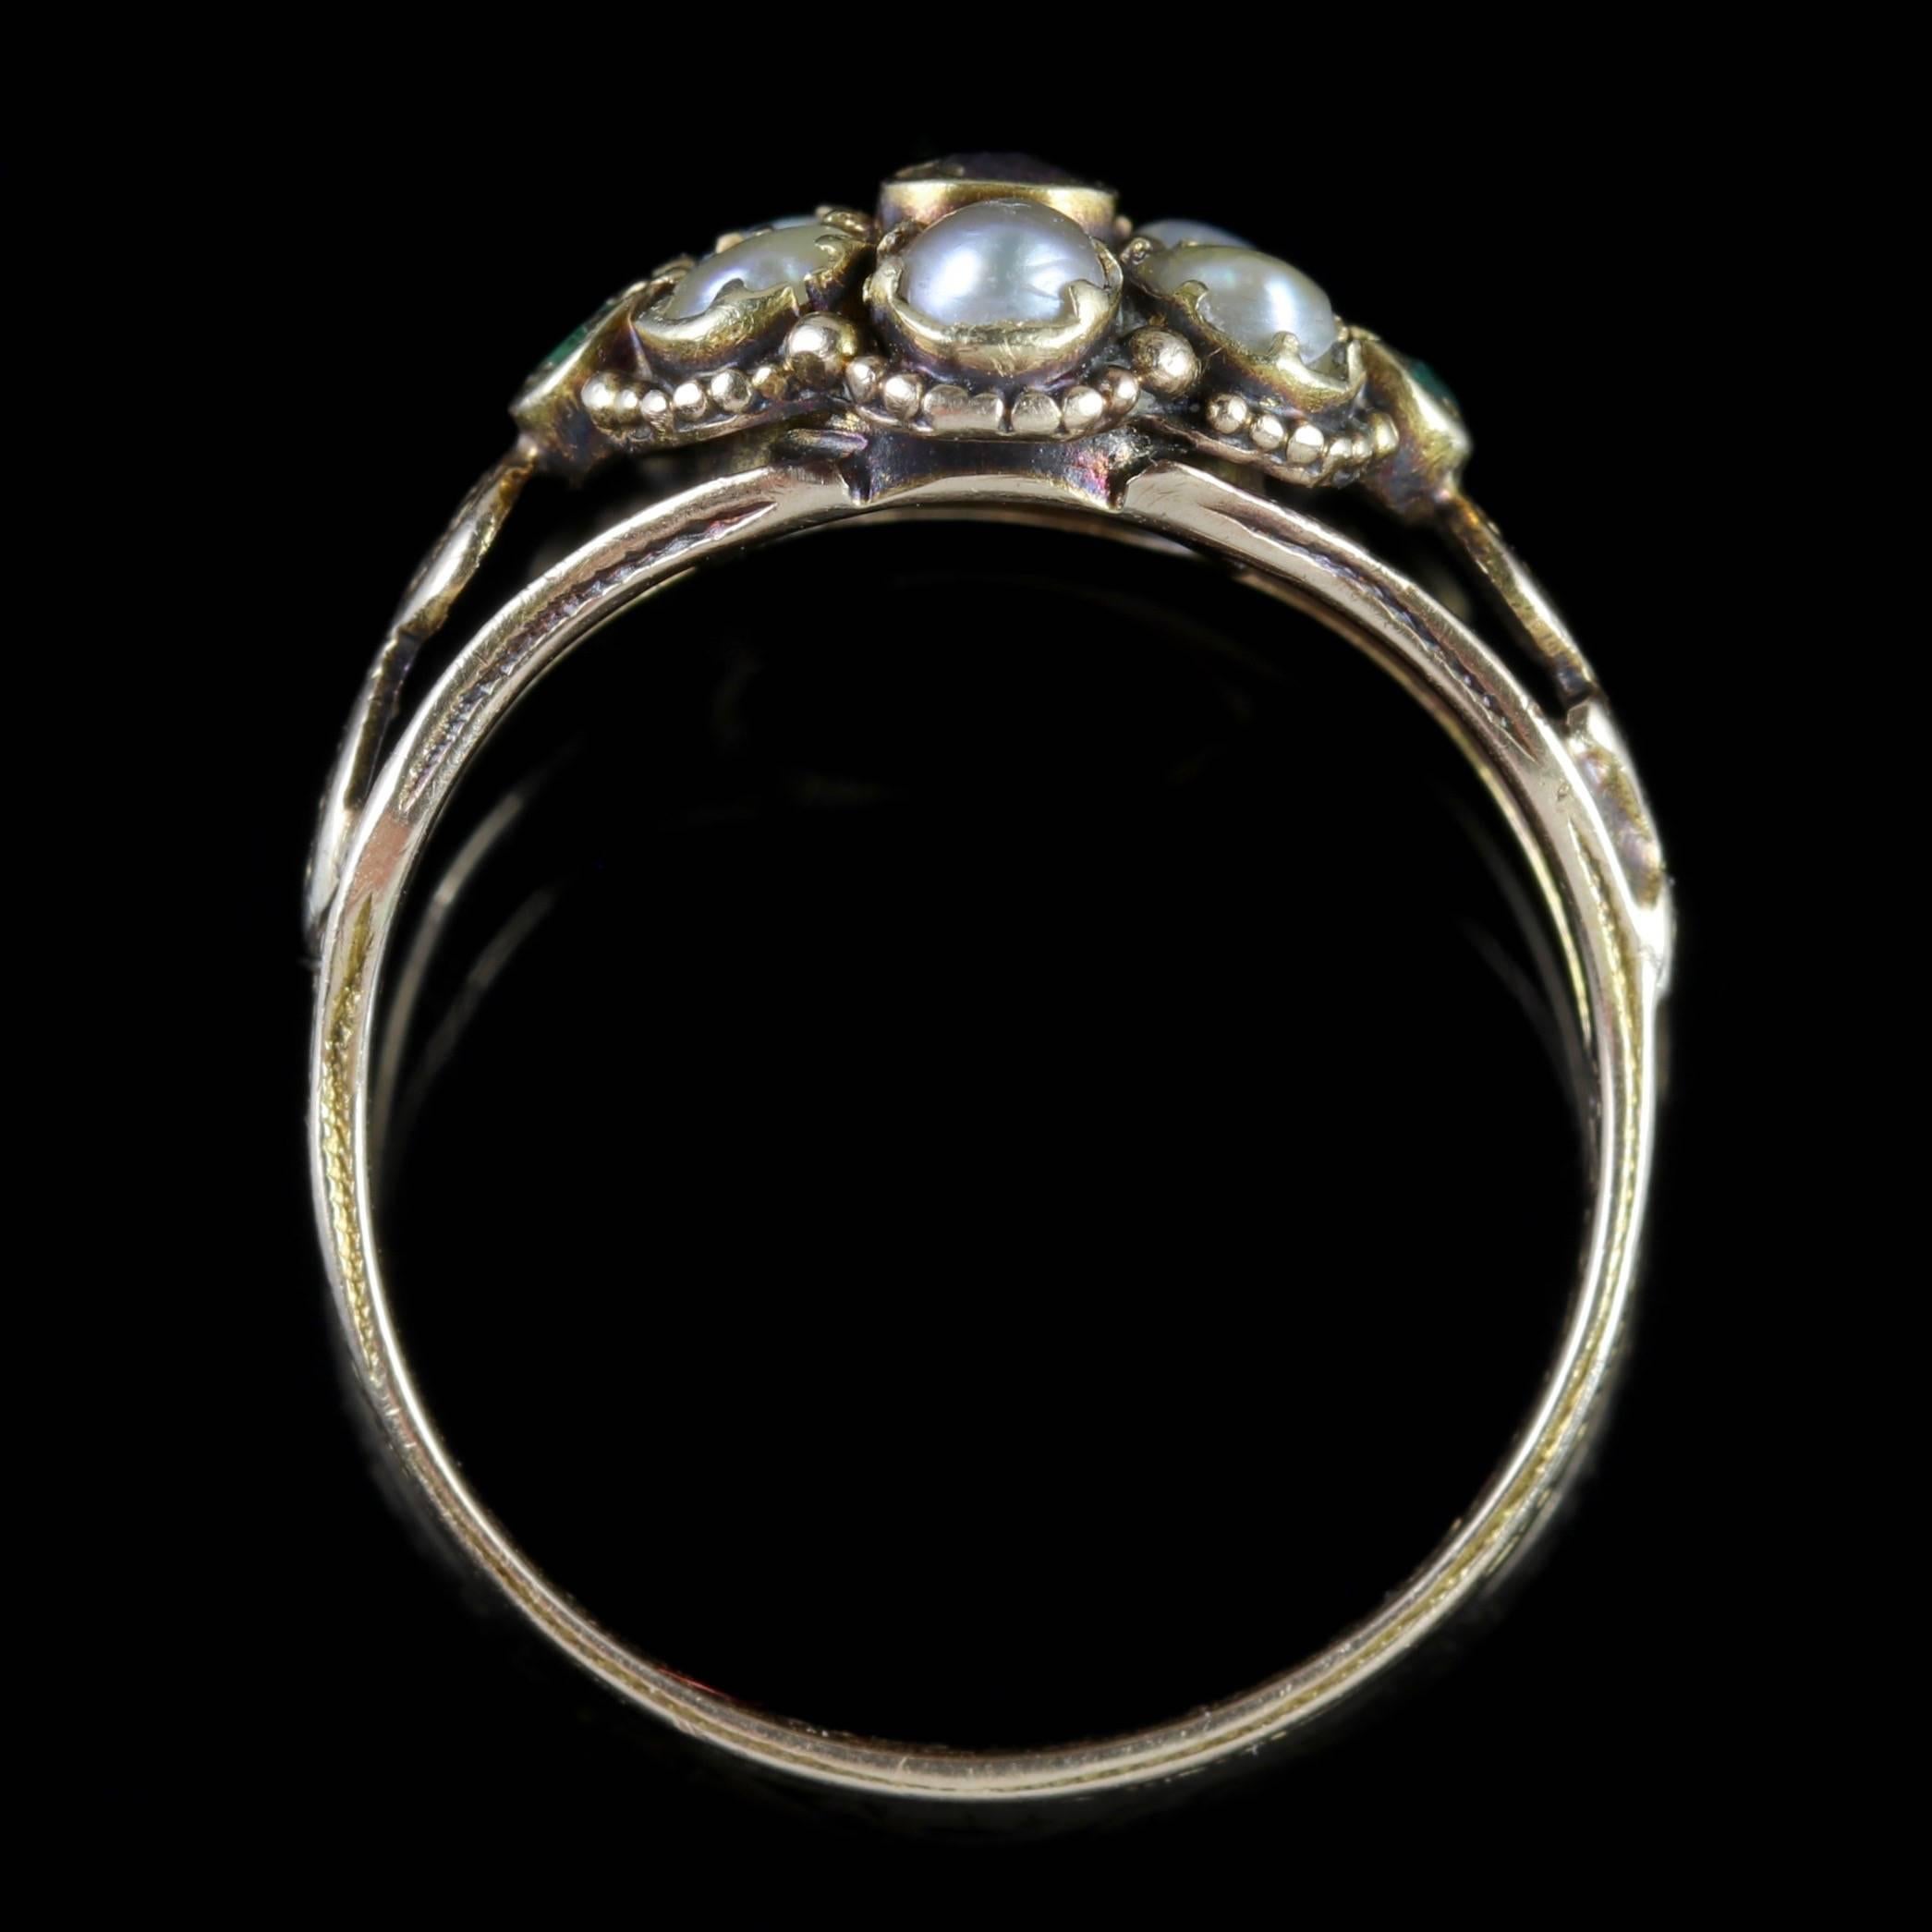 Women's Antique Georgian Ring 15 Carat Gold Garnet Emerald Pearl, circa 1800